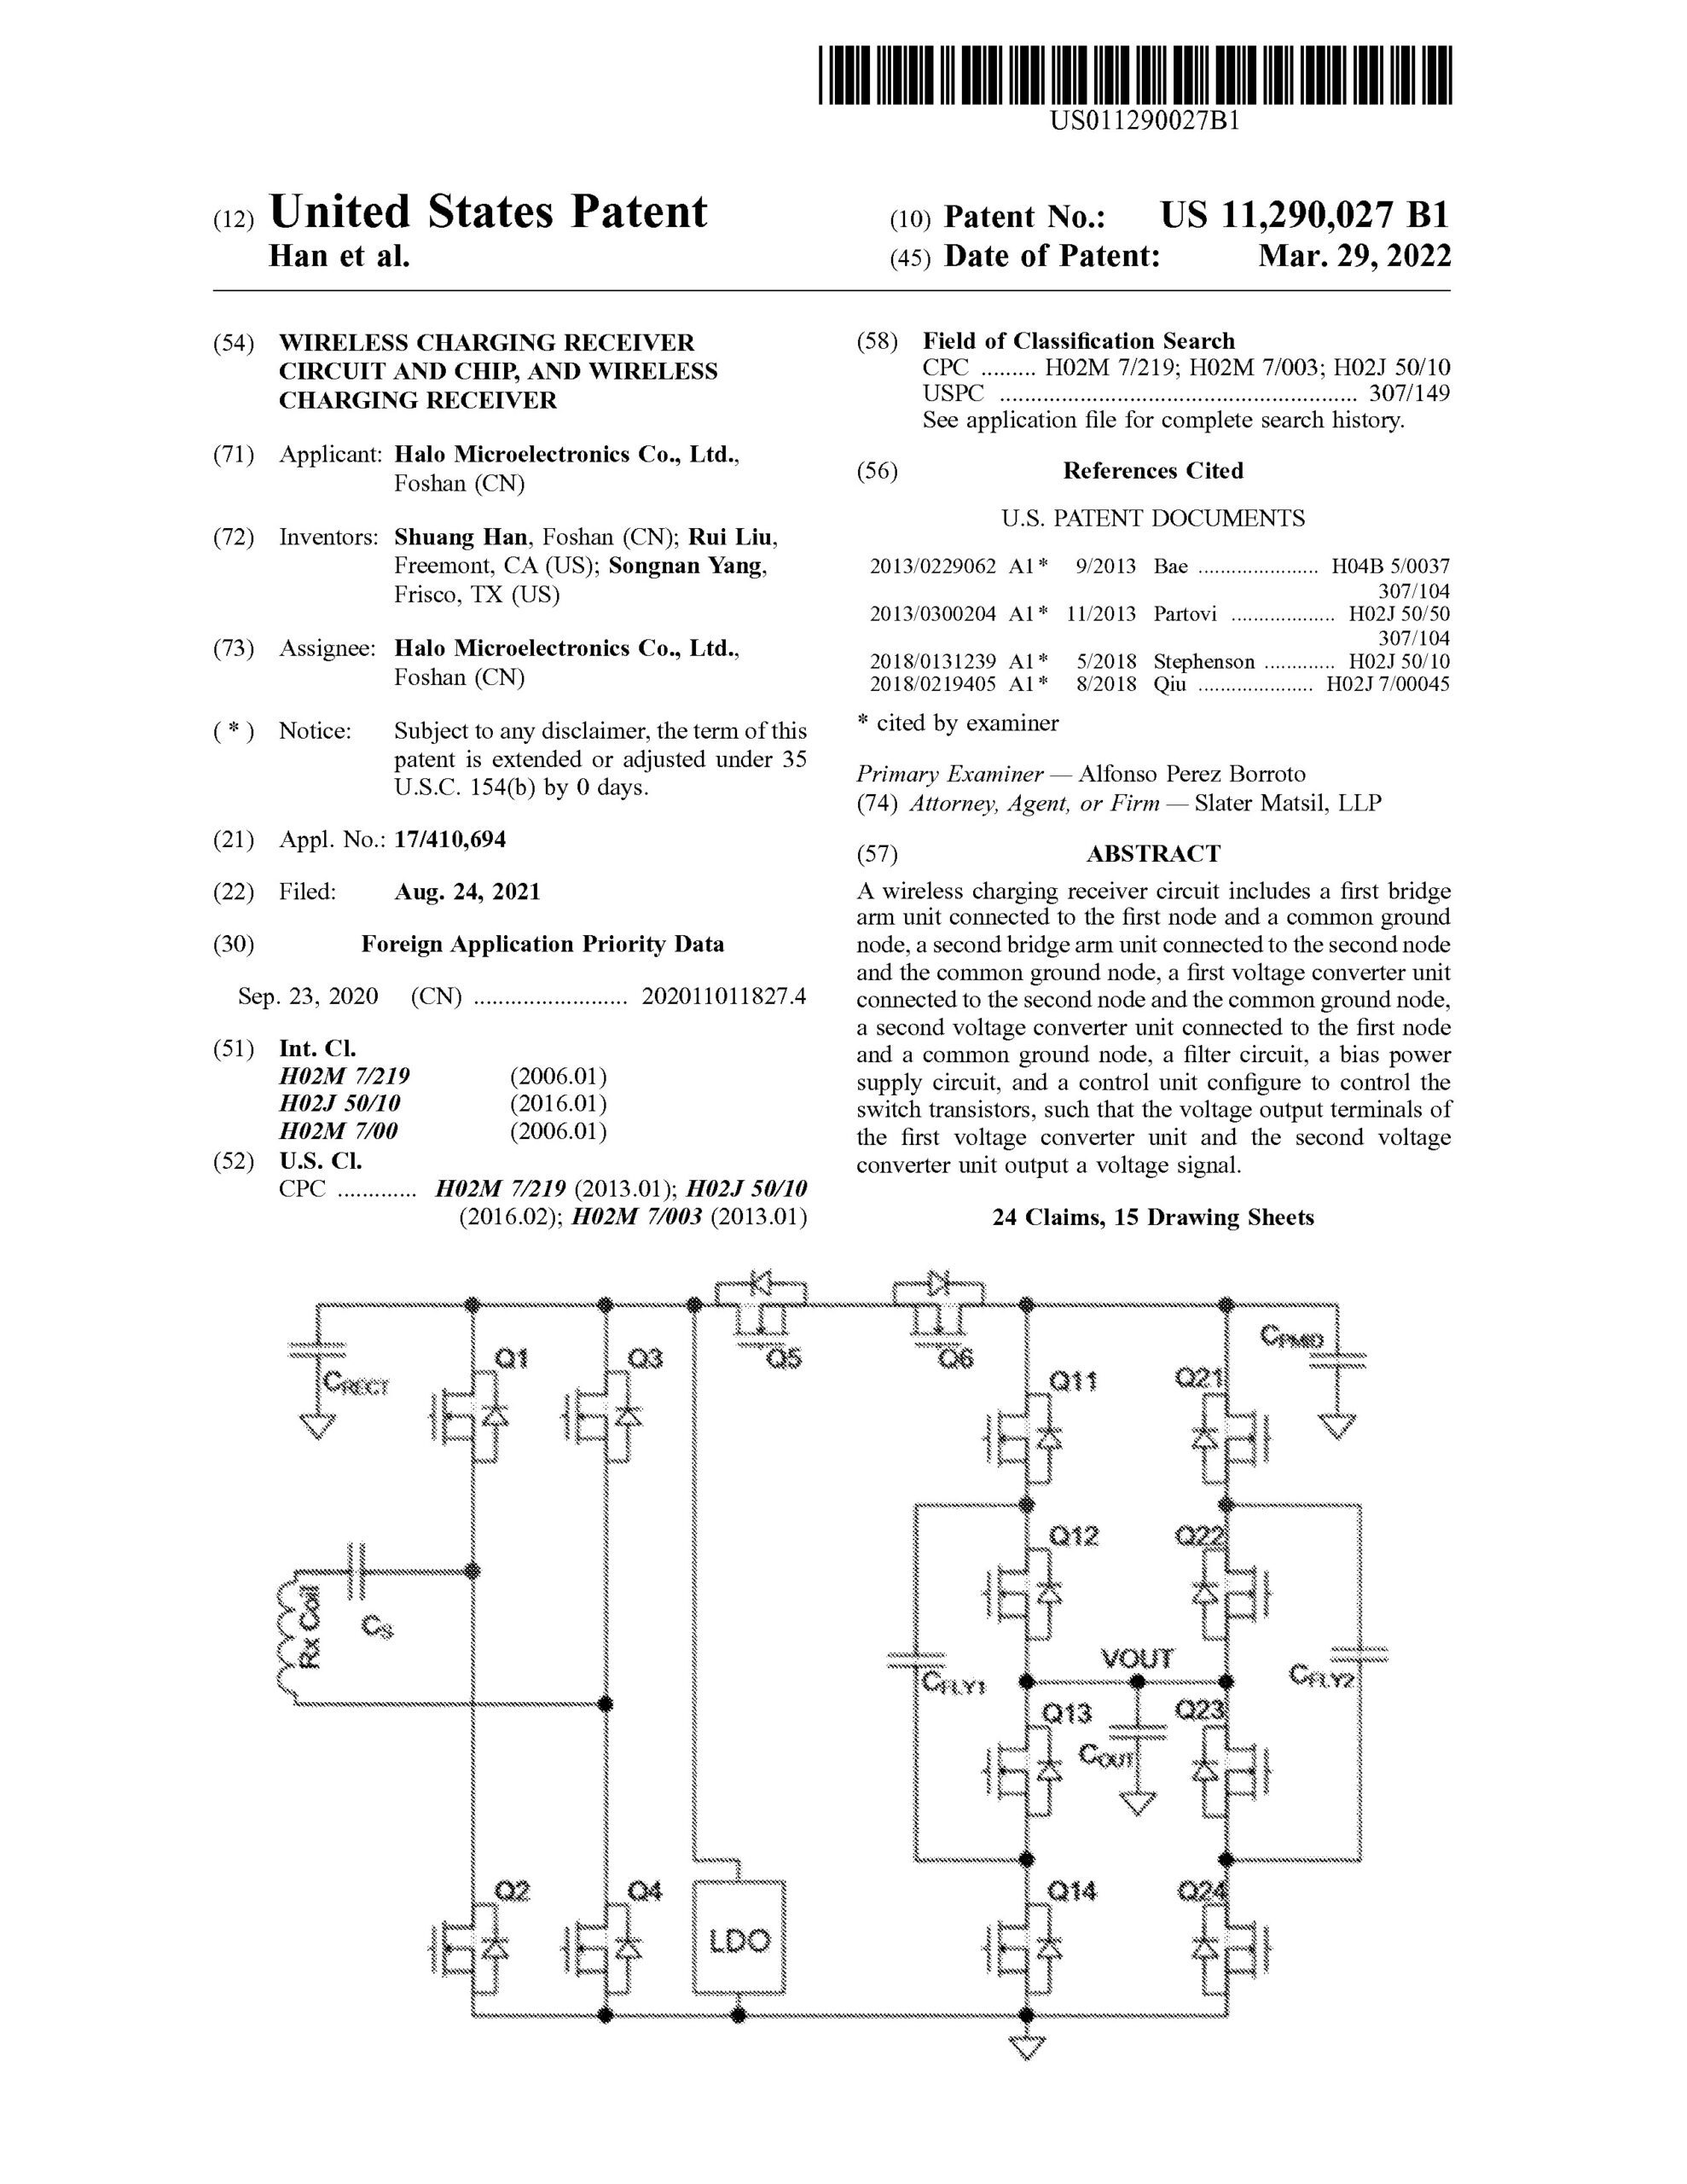 halo_micro_us-patent_us11290027b1-1-scaled